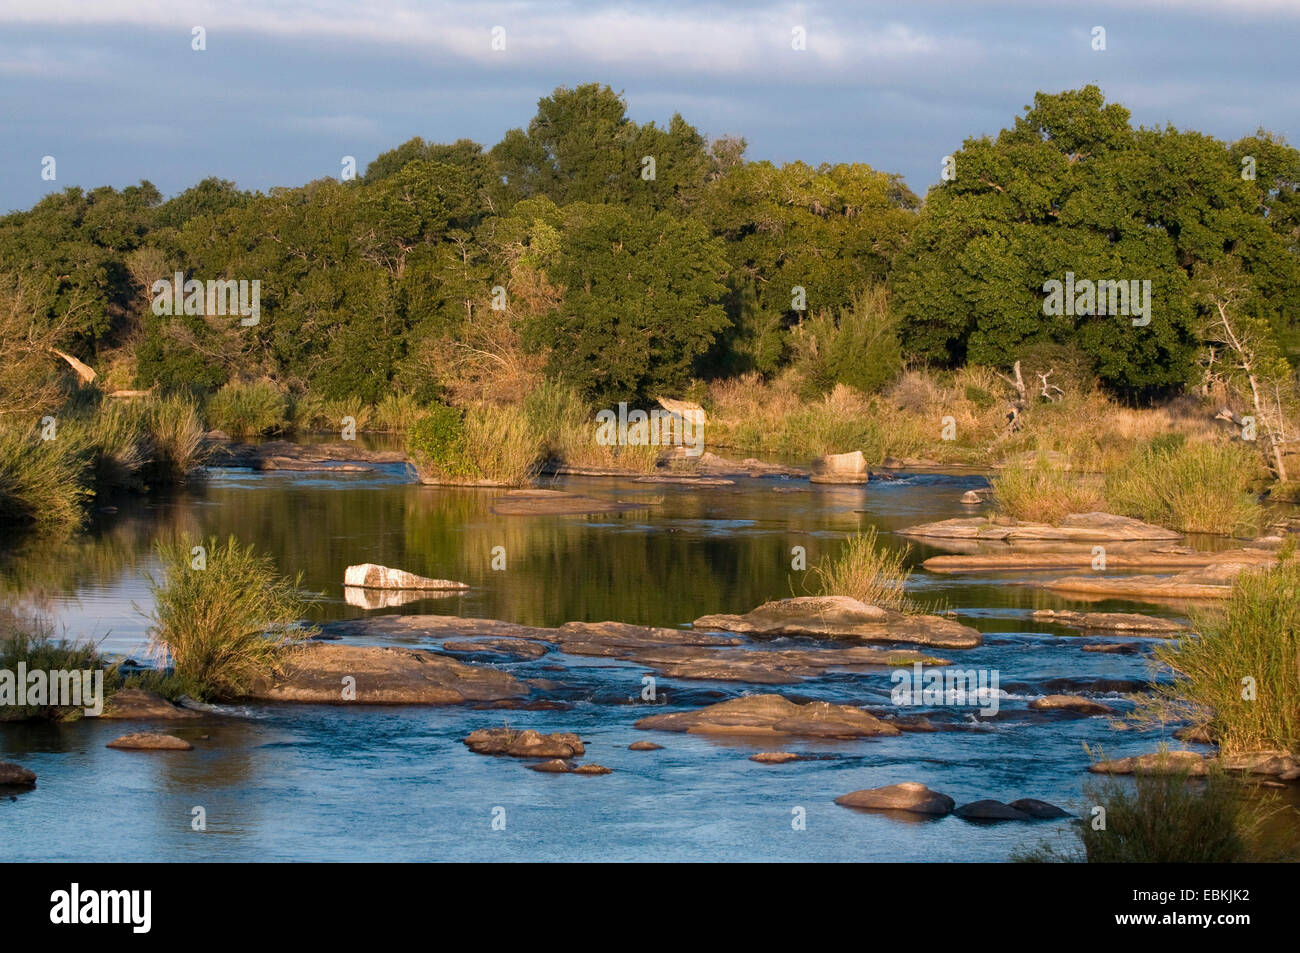 Fiume nel Krueger National Park, Sud Africa - Mpumalanga Krueger National Park Foto Stock